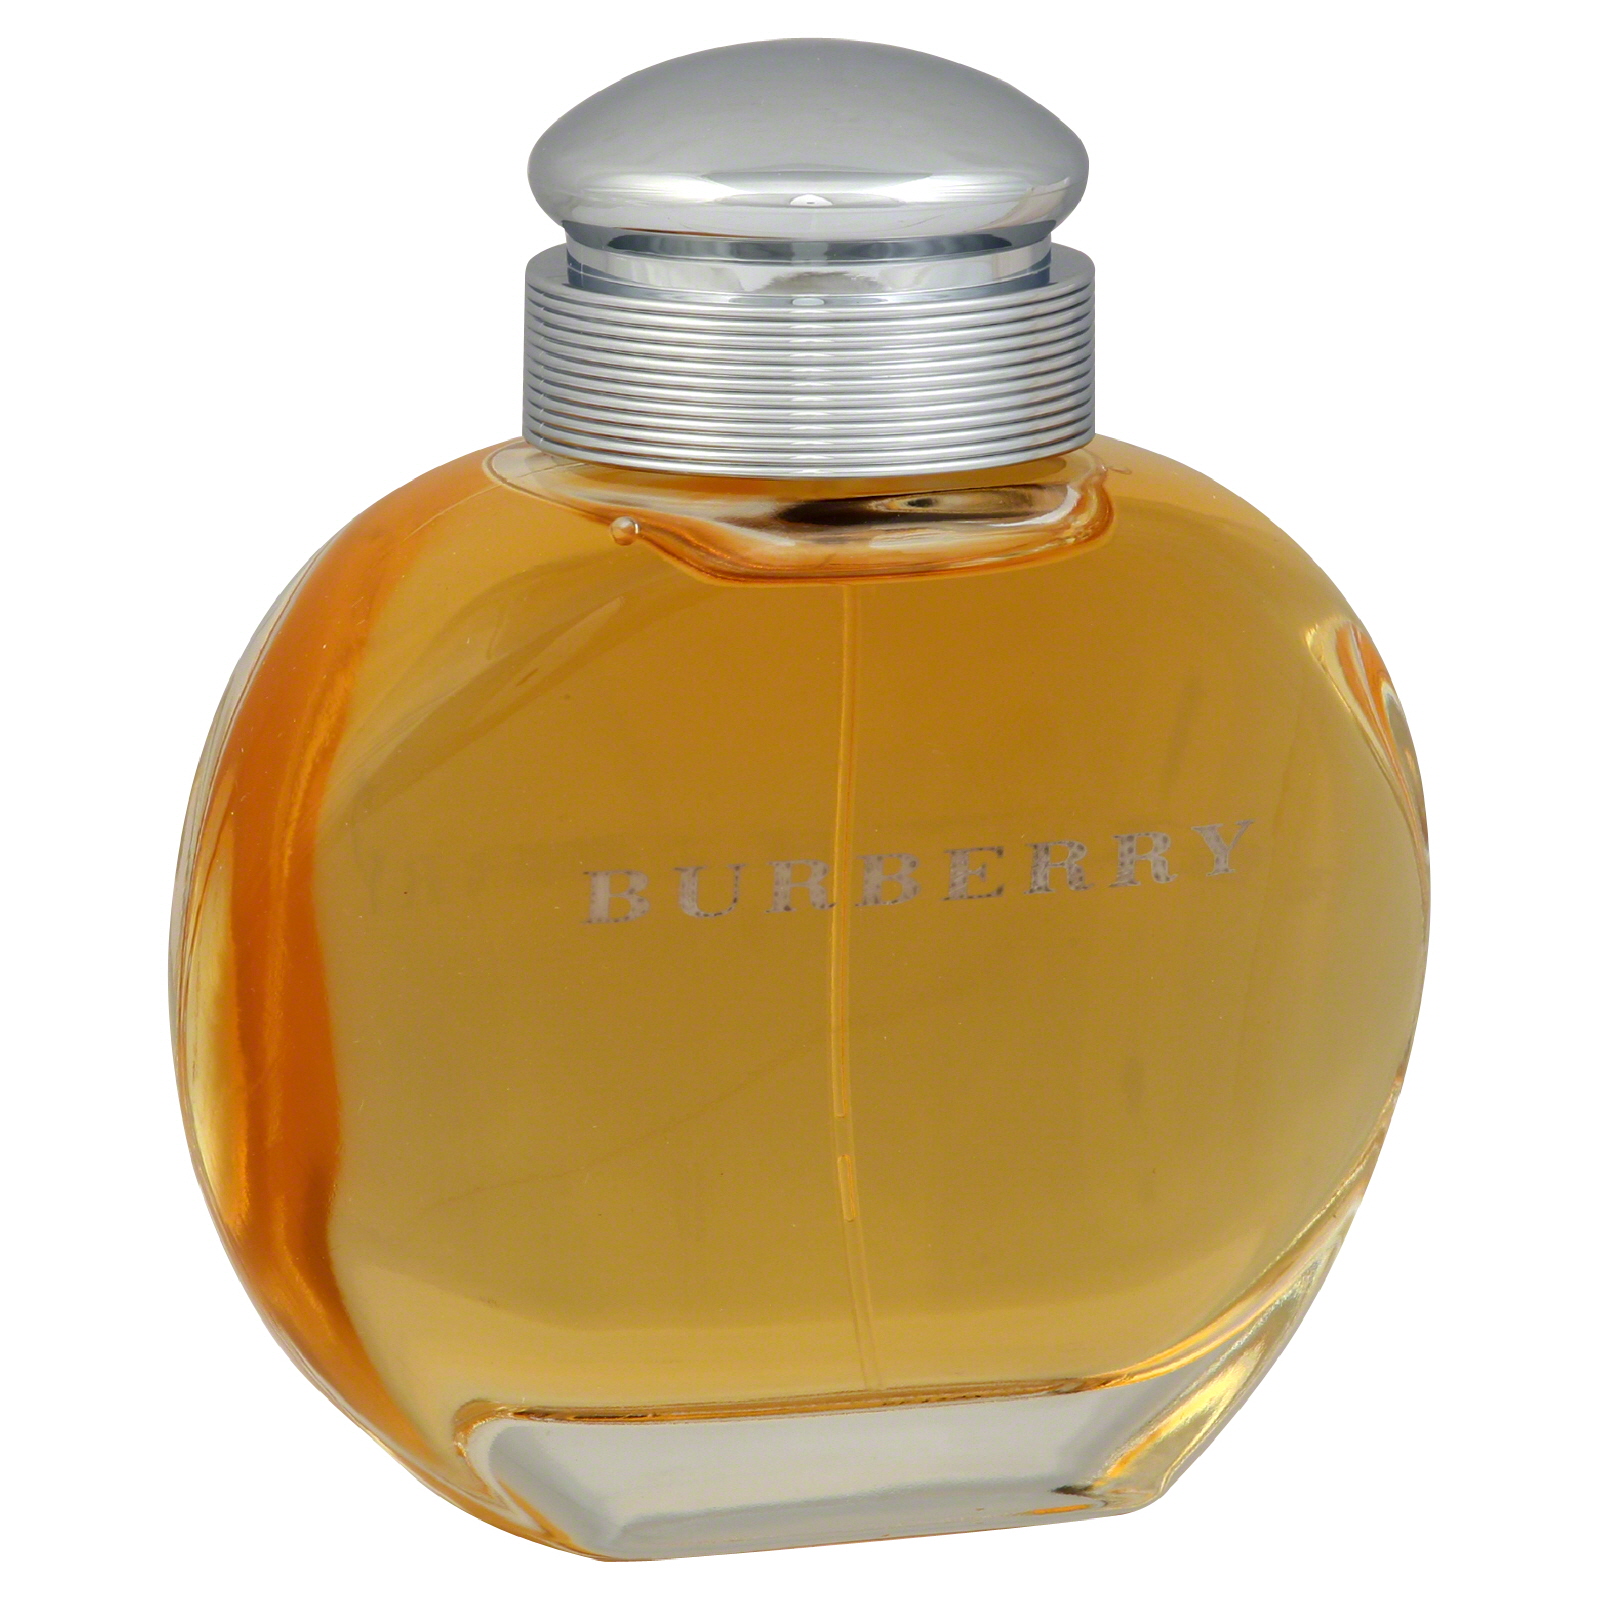 Burberry  by  for Women - 3.3 oz EDP Spray